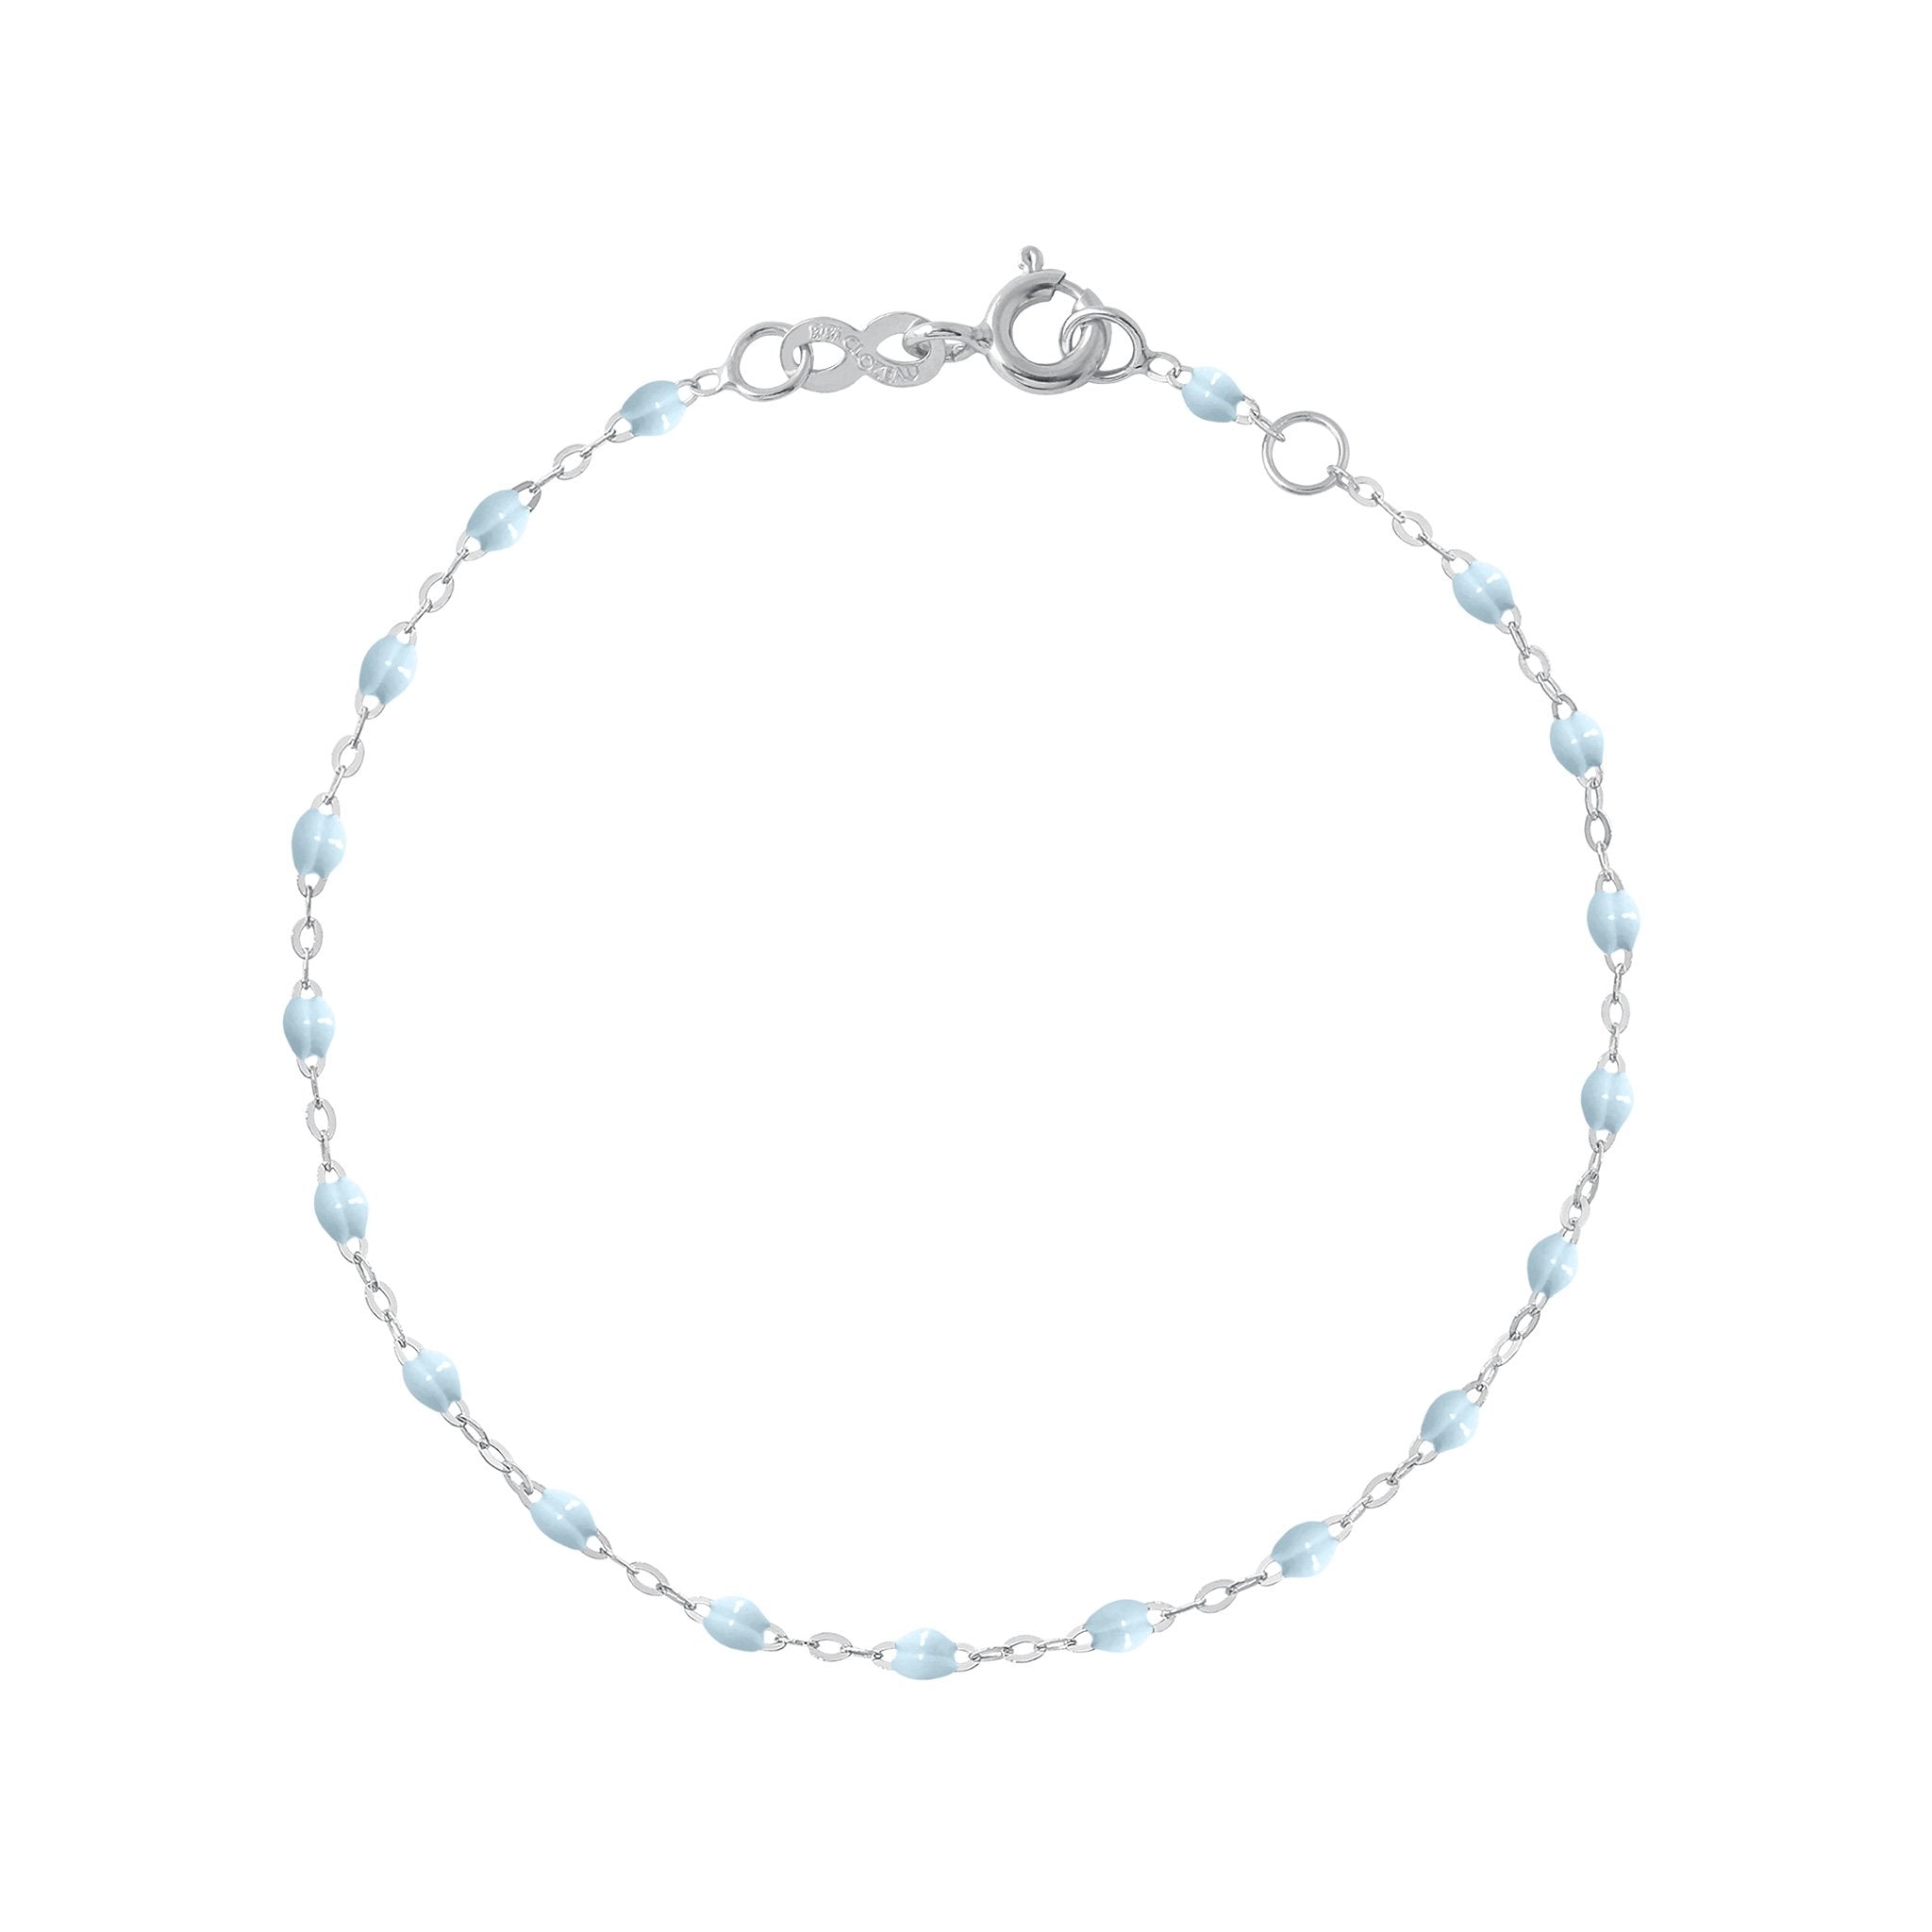 Bracelet bleu layette Classique Gigi, or blanc, 15 cm classique gigi Référence :  b3gi001g1515xx -1